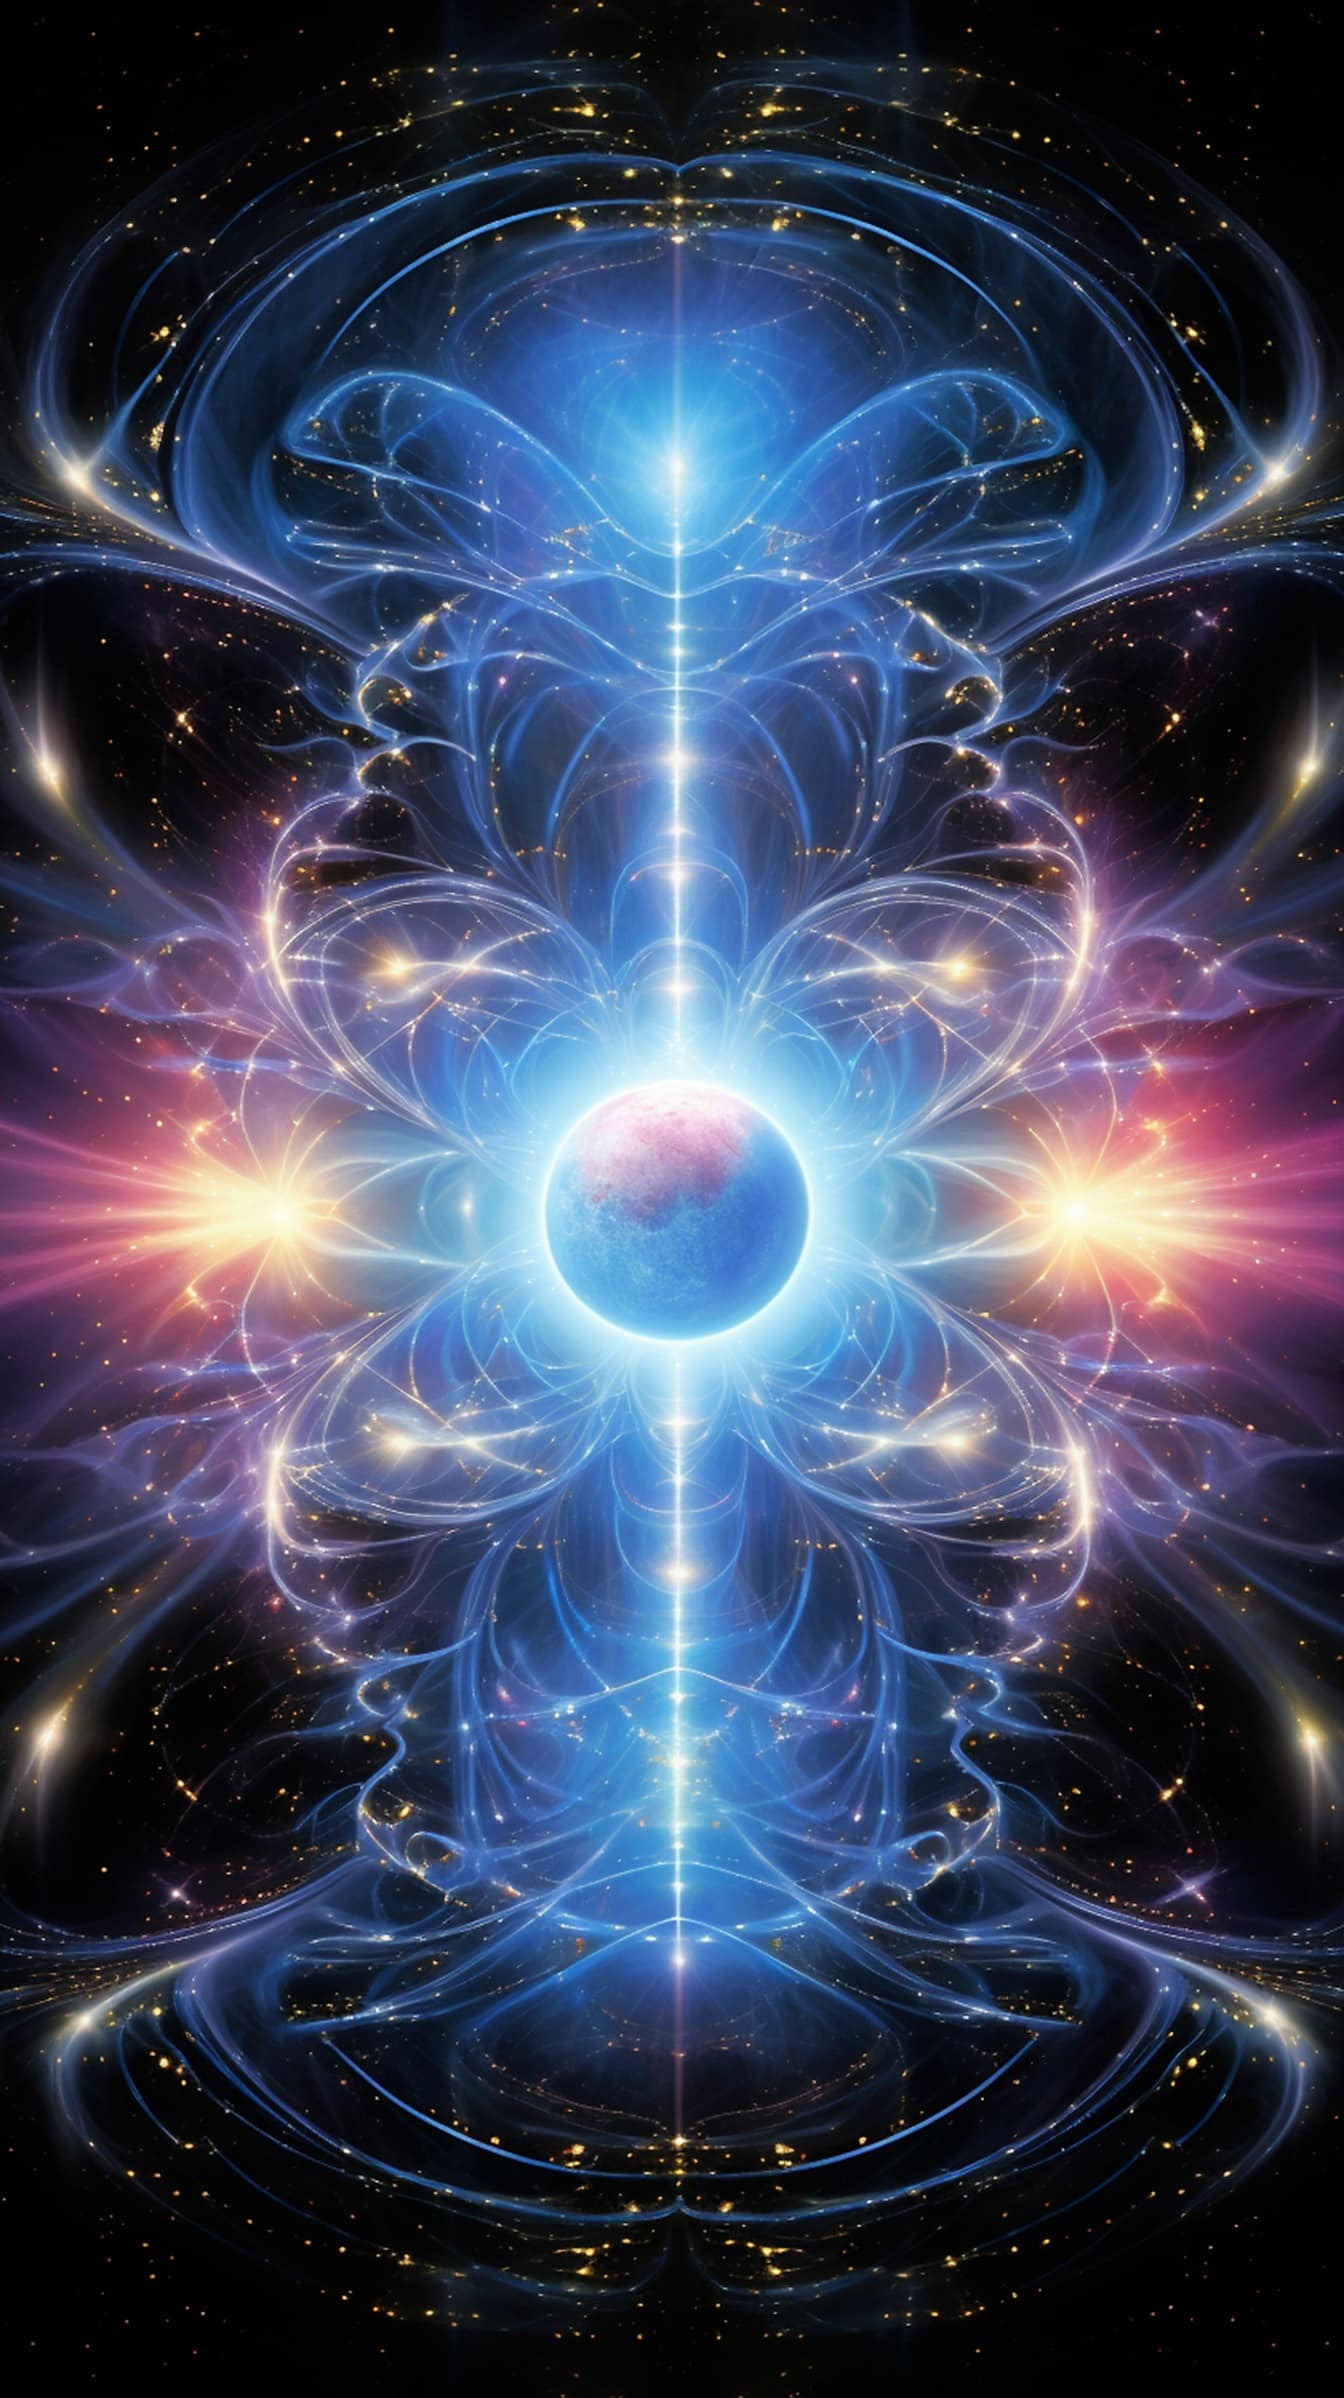 Cosmic plasma energy majestic astrology graphic aillusration